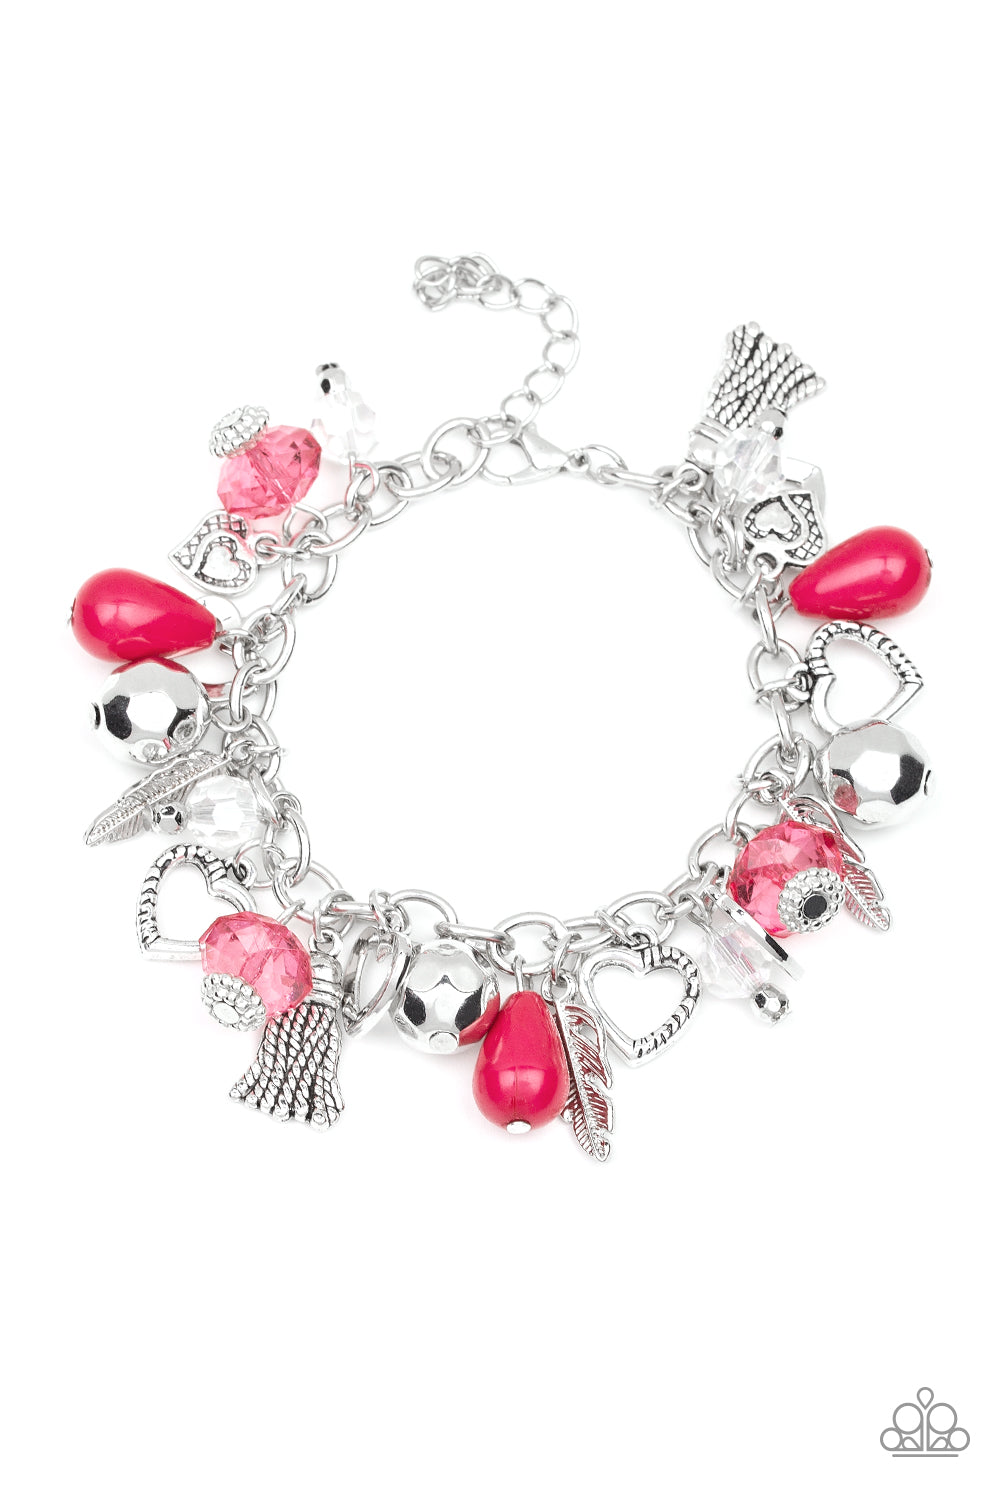 Completely Innocent Pink Paparazzi Bracelet Cashmere Pink Jewels - Cashmere Pink Jewels & Accessories, Cashmere Pink Jewels & Accessories - Paparazzi